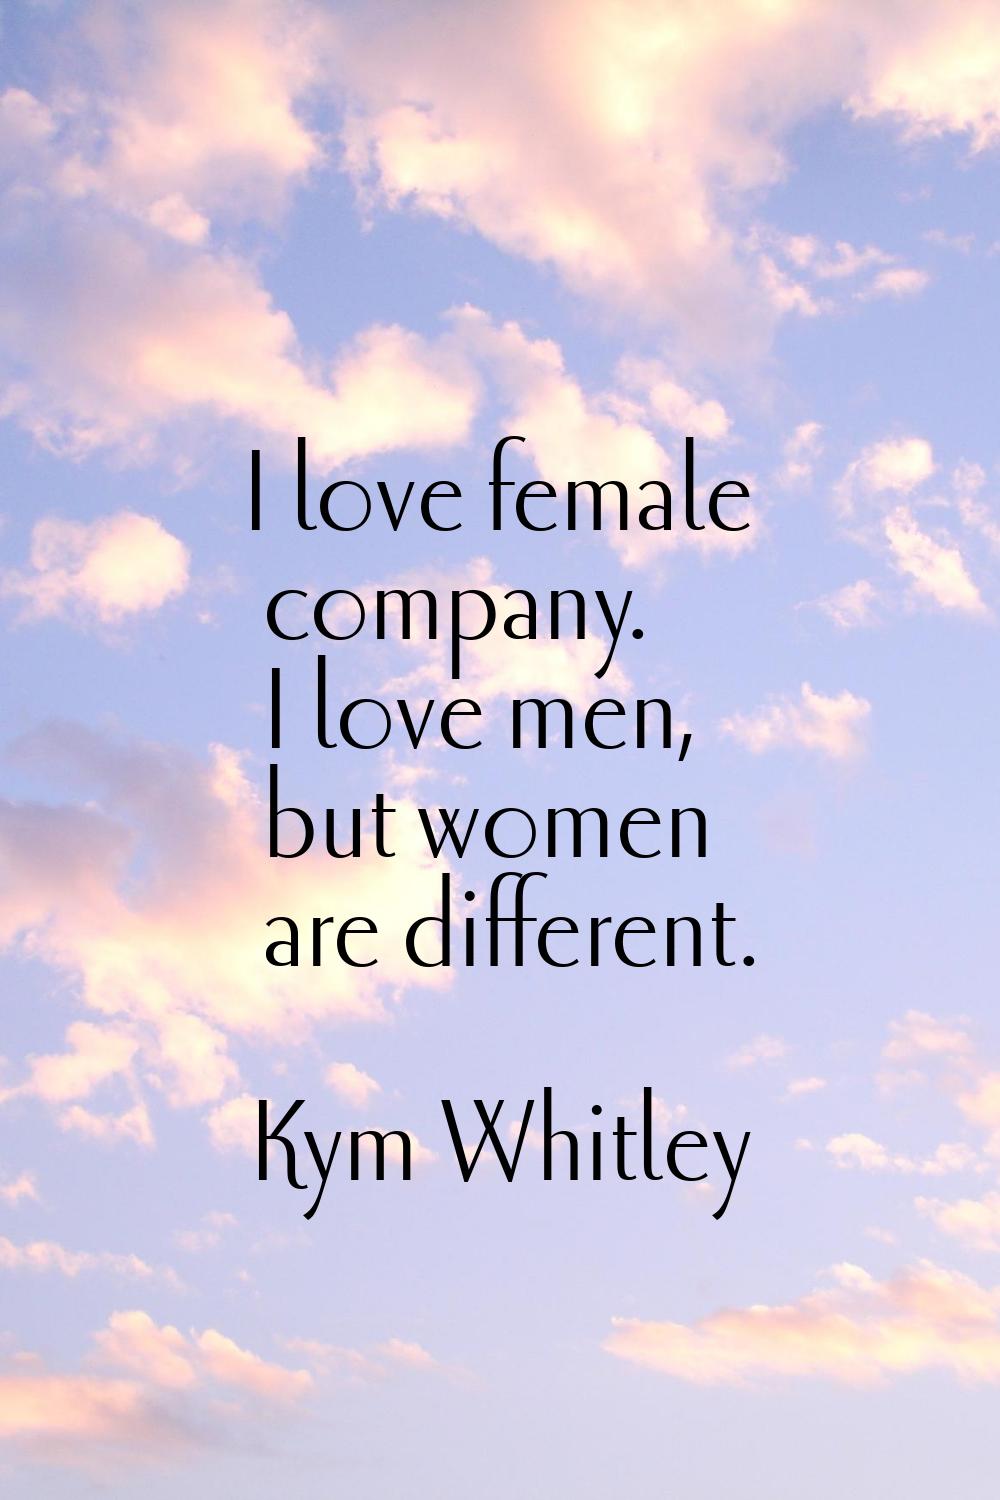 I love female company. I love men, but women are different.